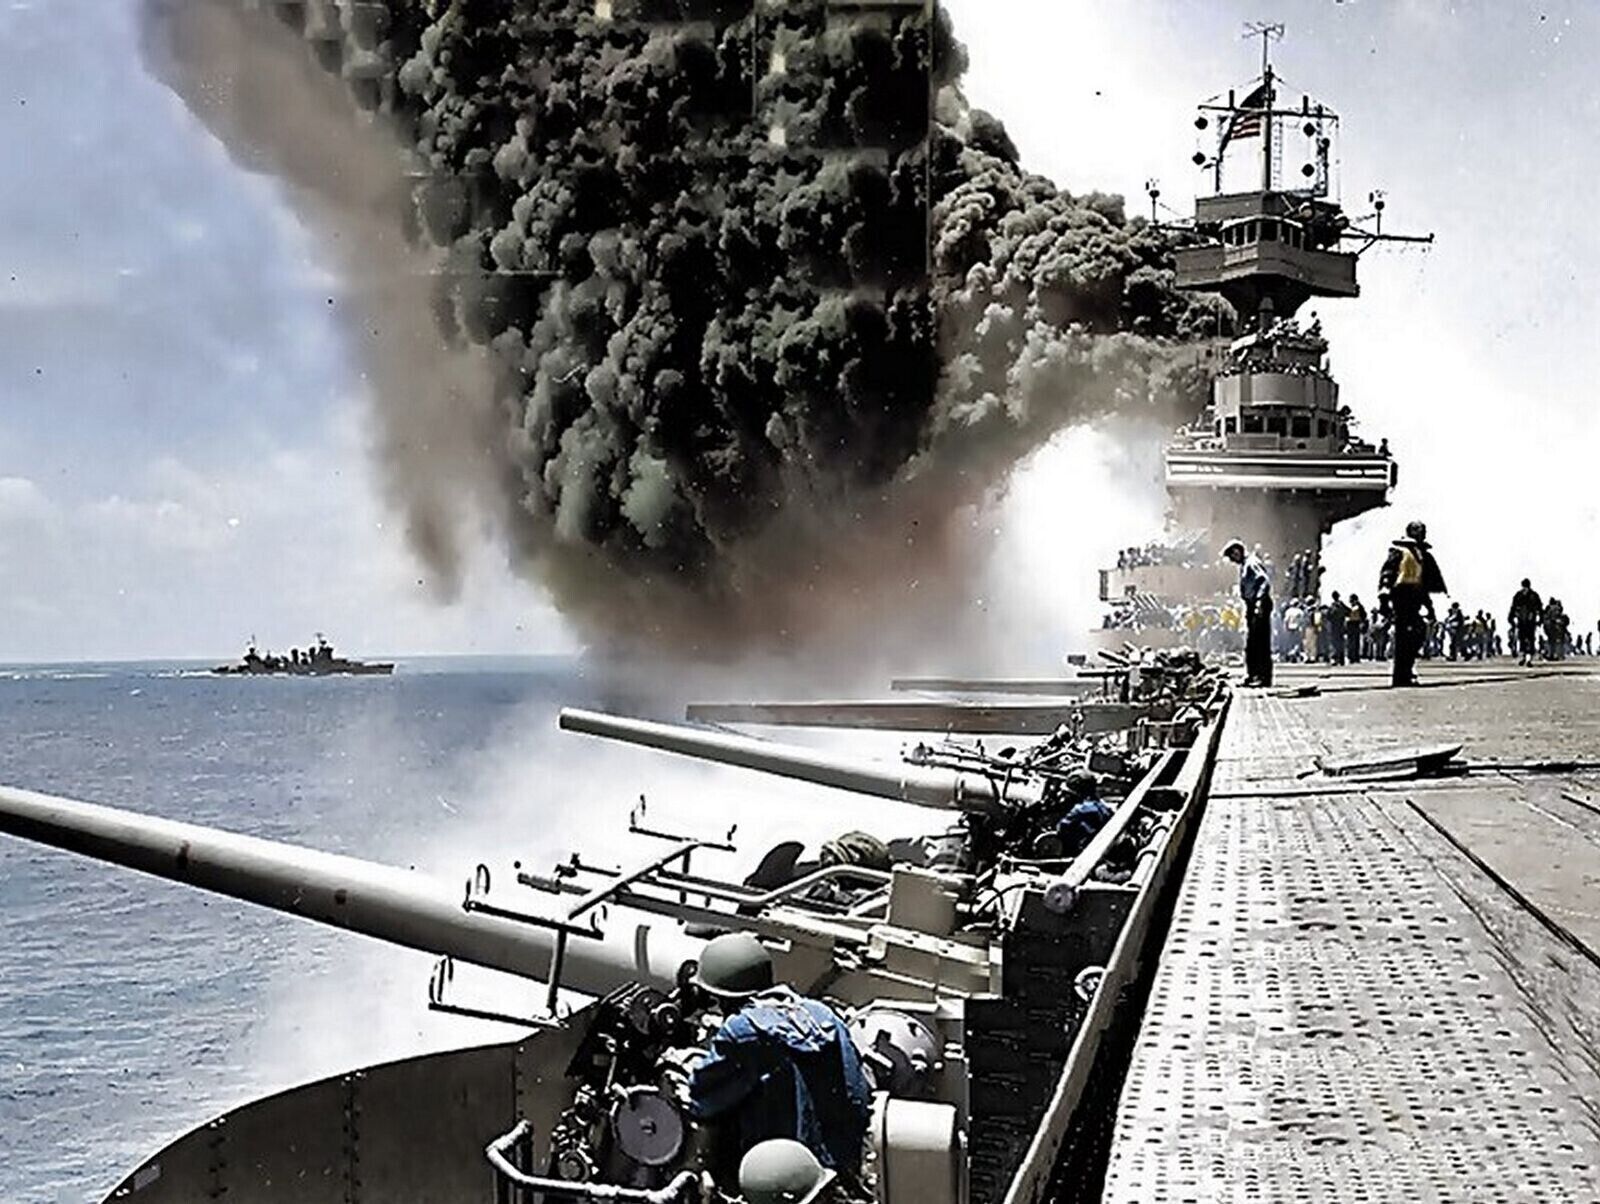 World War 2 USS YORKTOWN US Naval Ship DURING BATTLE Picture Photo Print 8x10